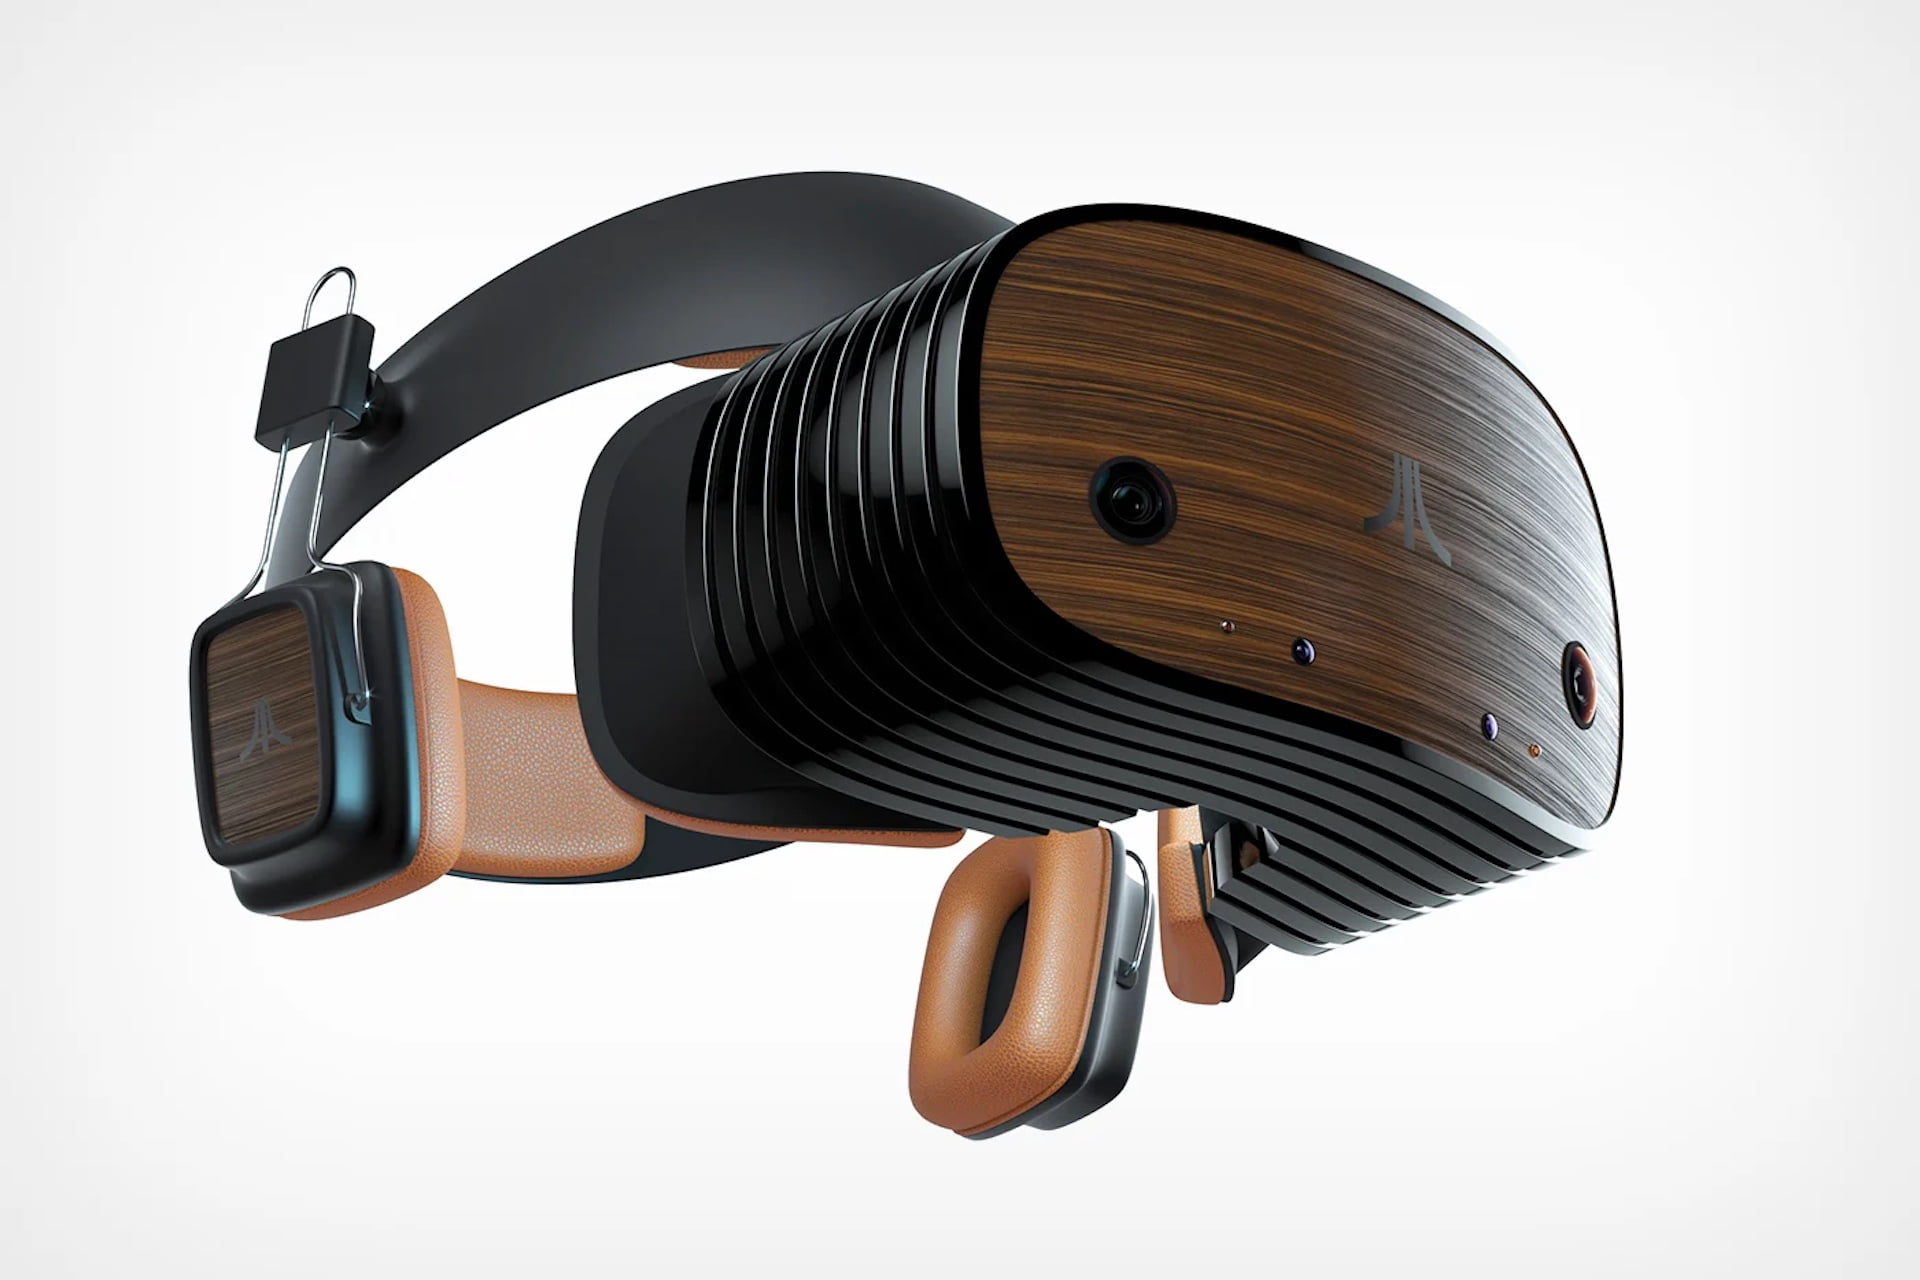 Fictional Atari VR headset pointing toward the future